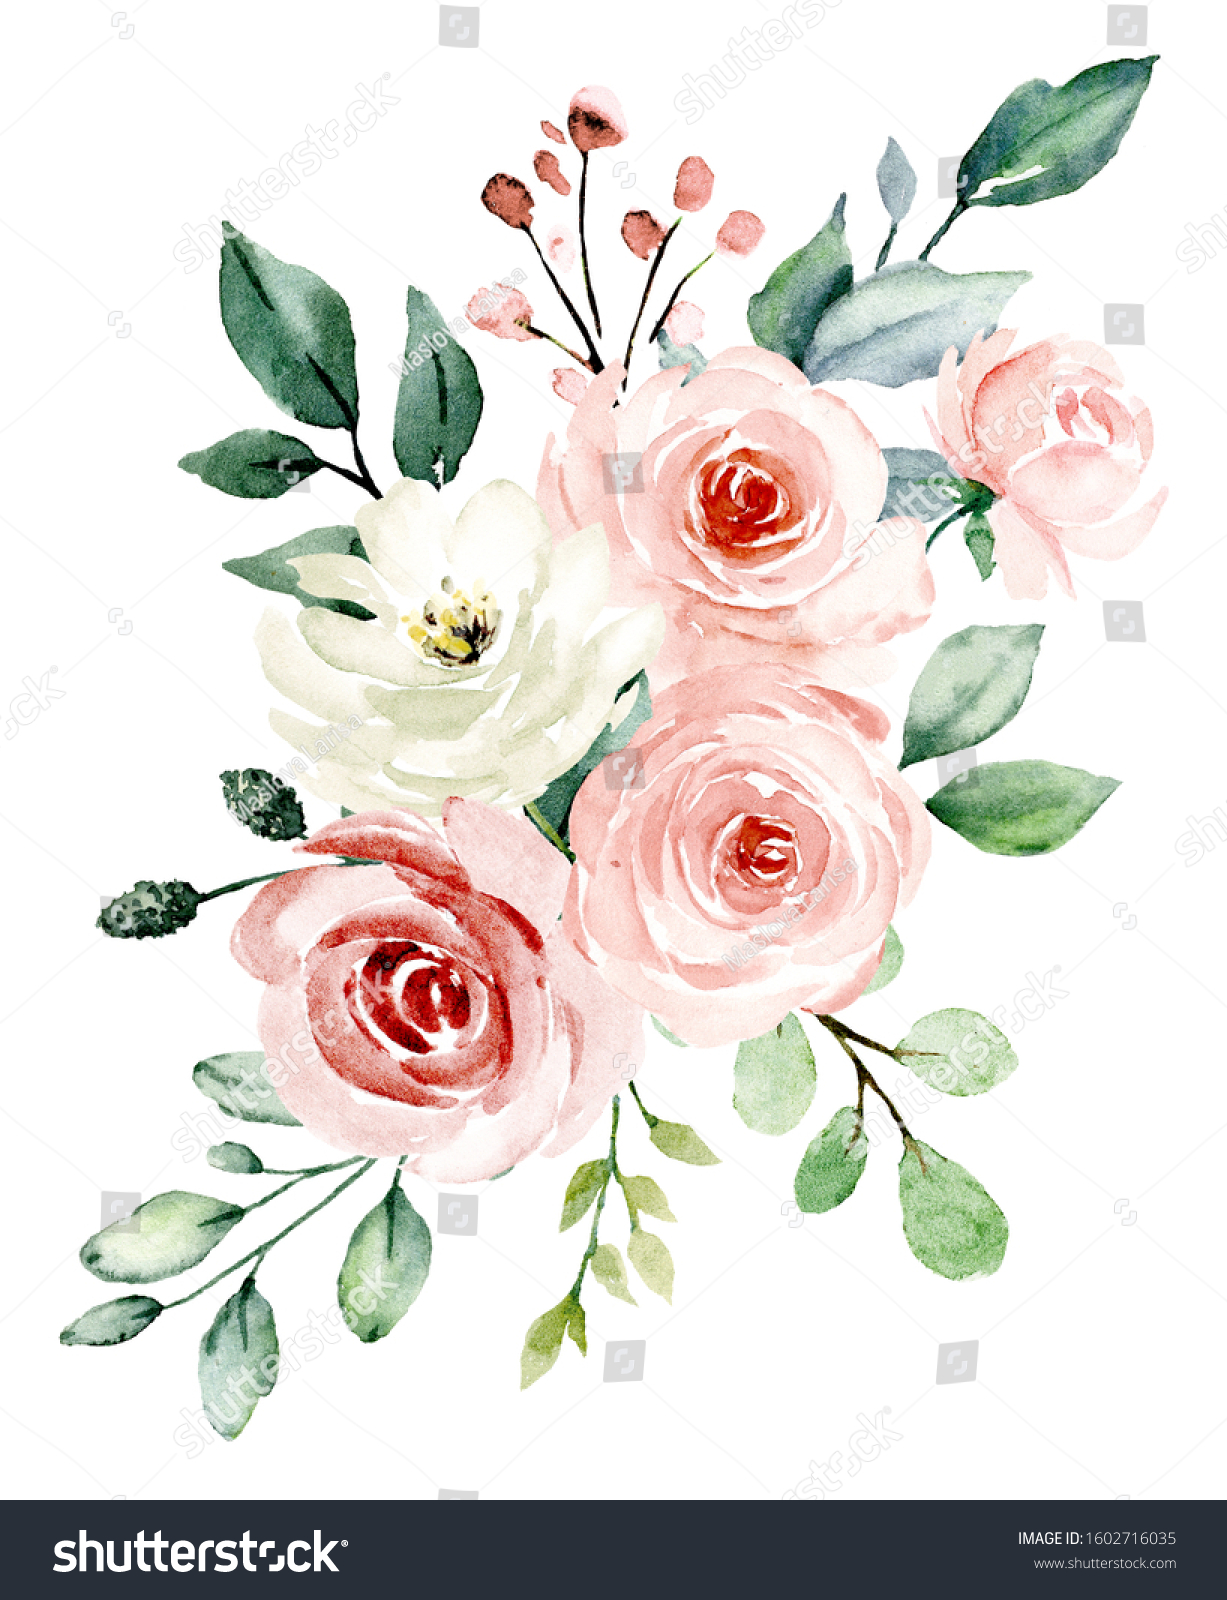 Pink Flowers Watercolor, Floral Clip Art. - Royalty Free Stock Photo 1602716035 - Avopix.com